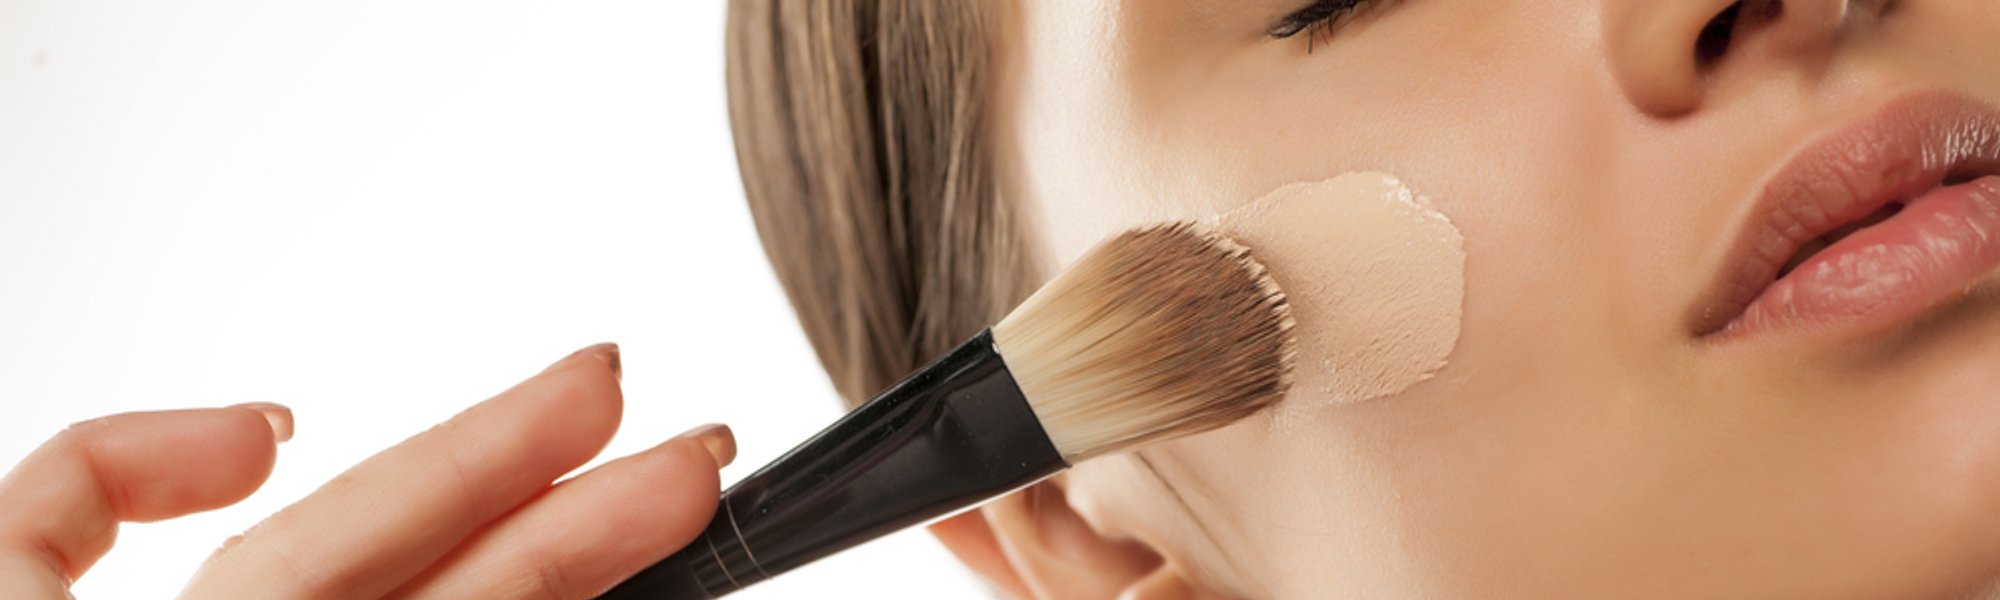 How to Fix Cakey Makeup - L'Oréal Paris